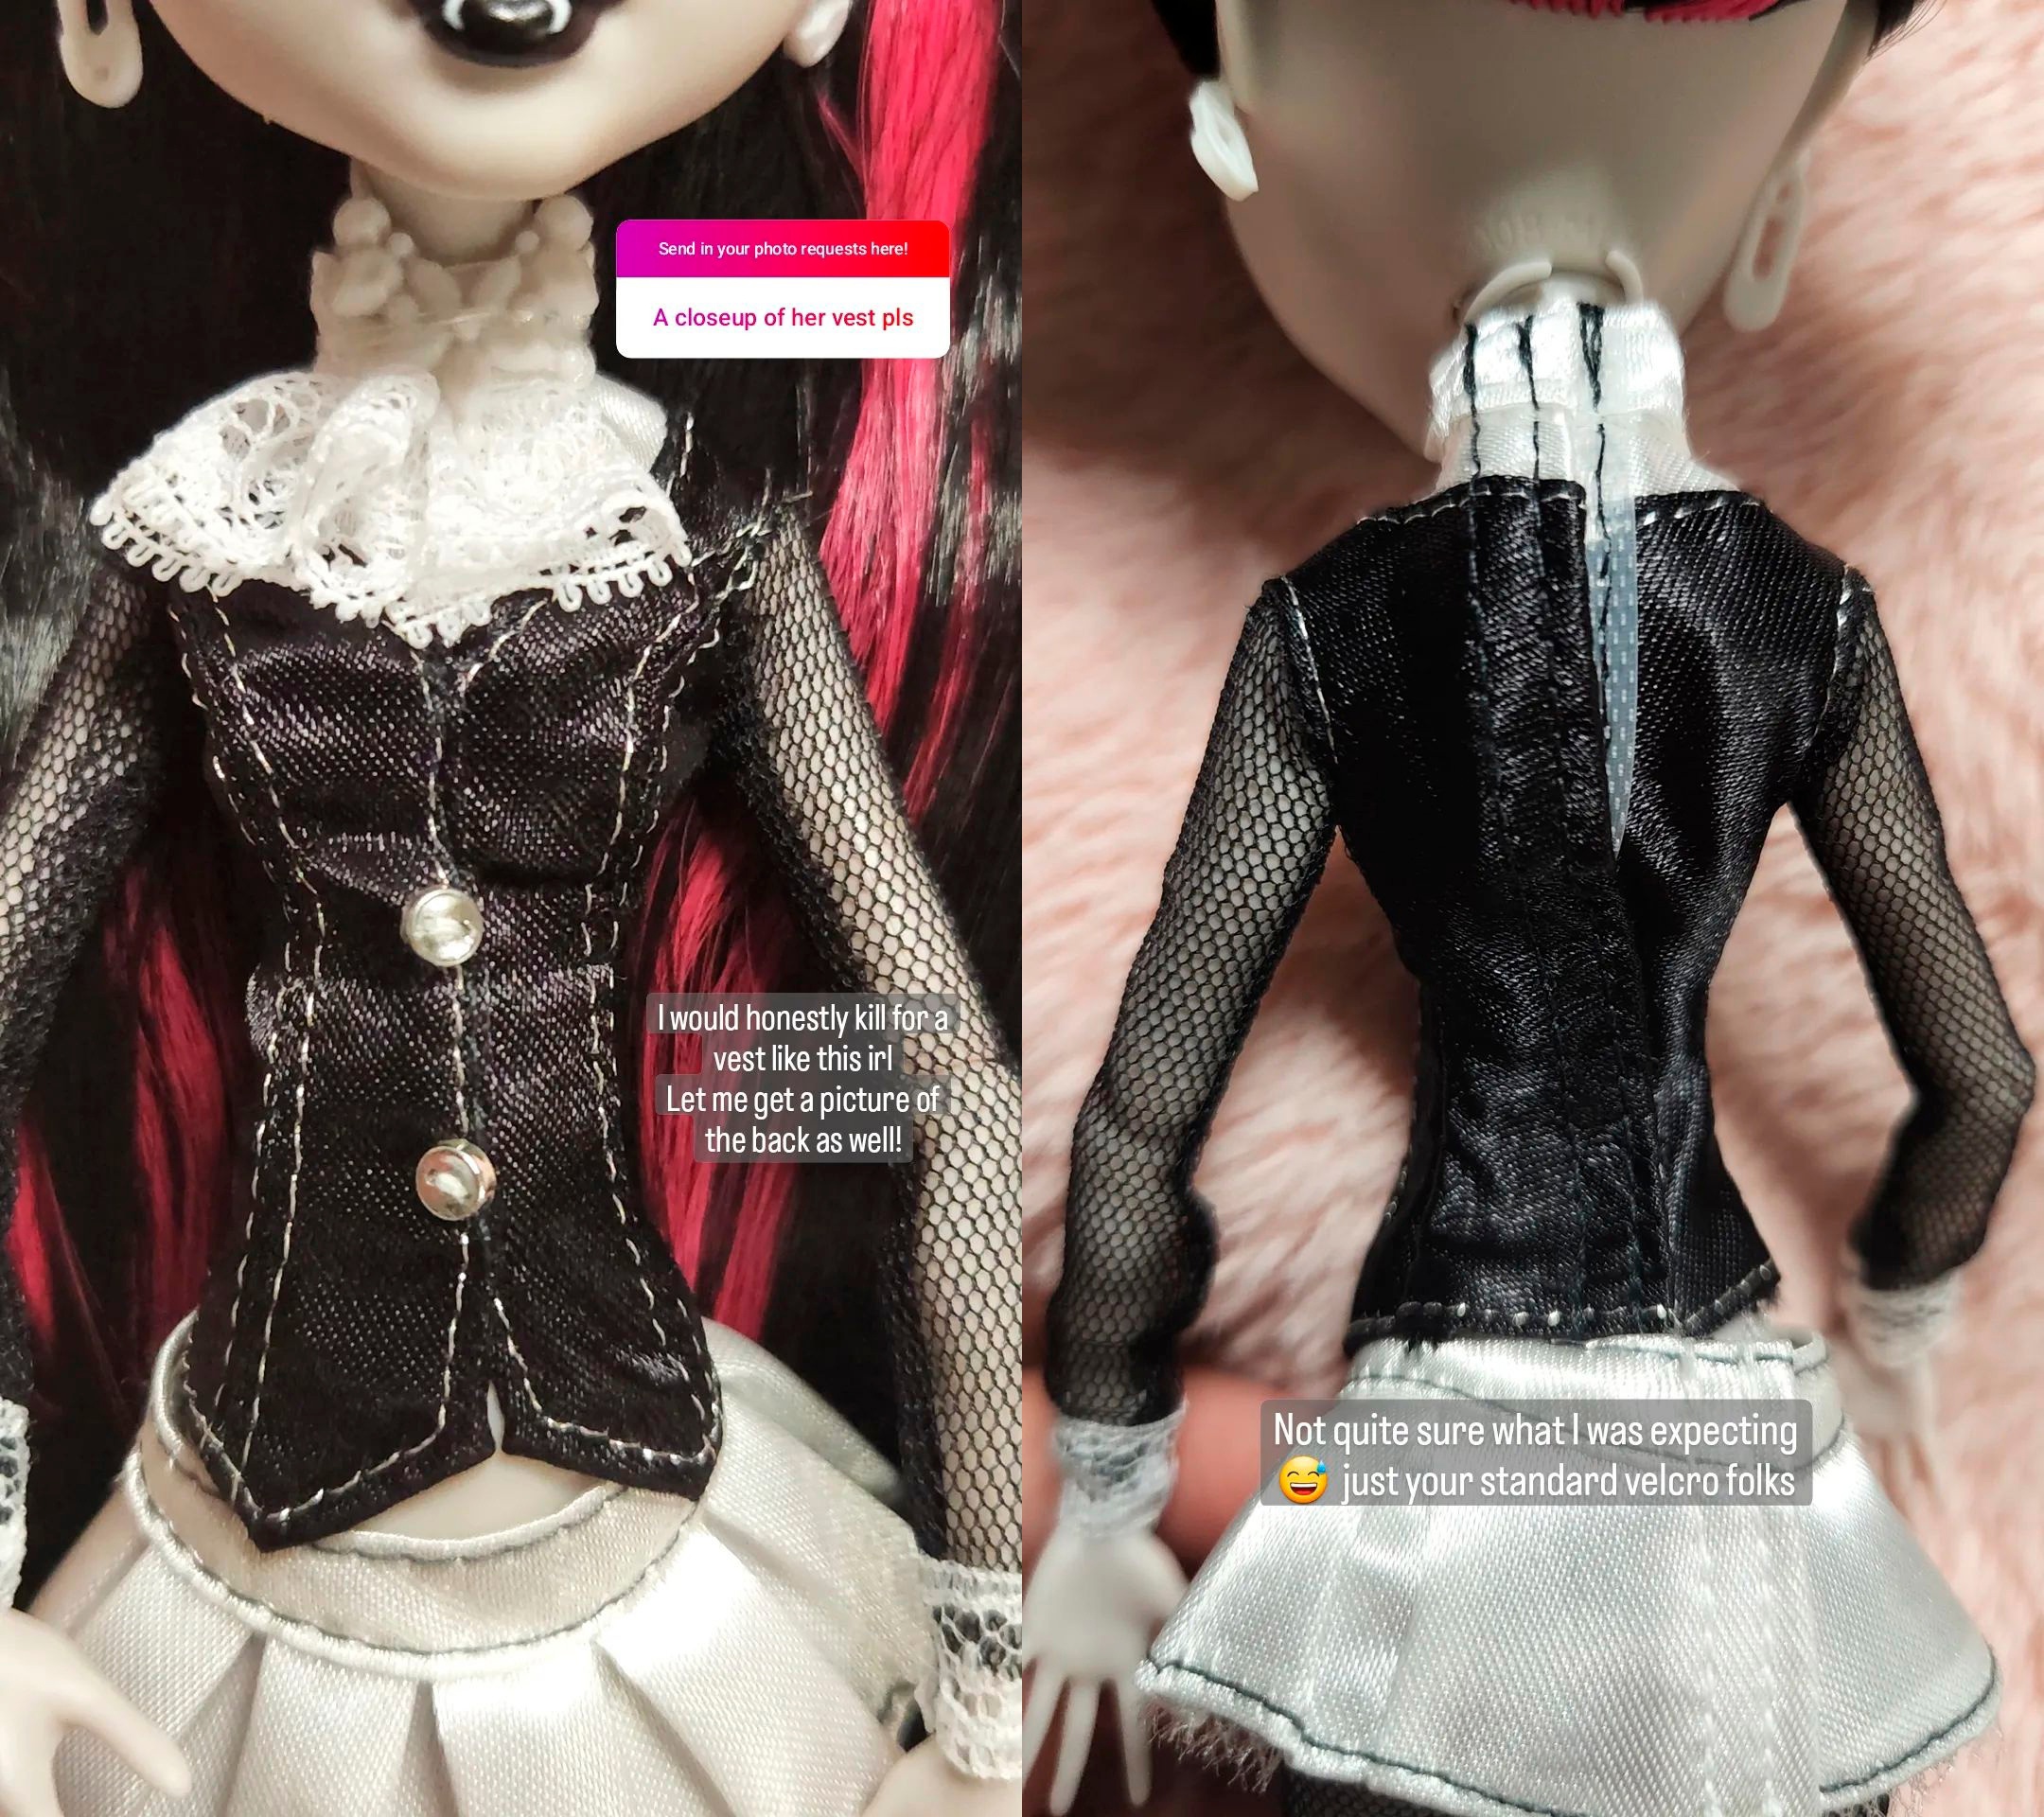 Monster High Reel Drama Draculaura Doll & Pet, Black & White Look